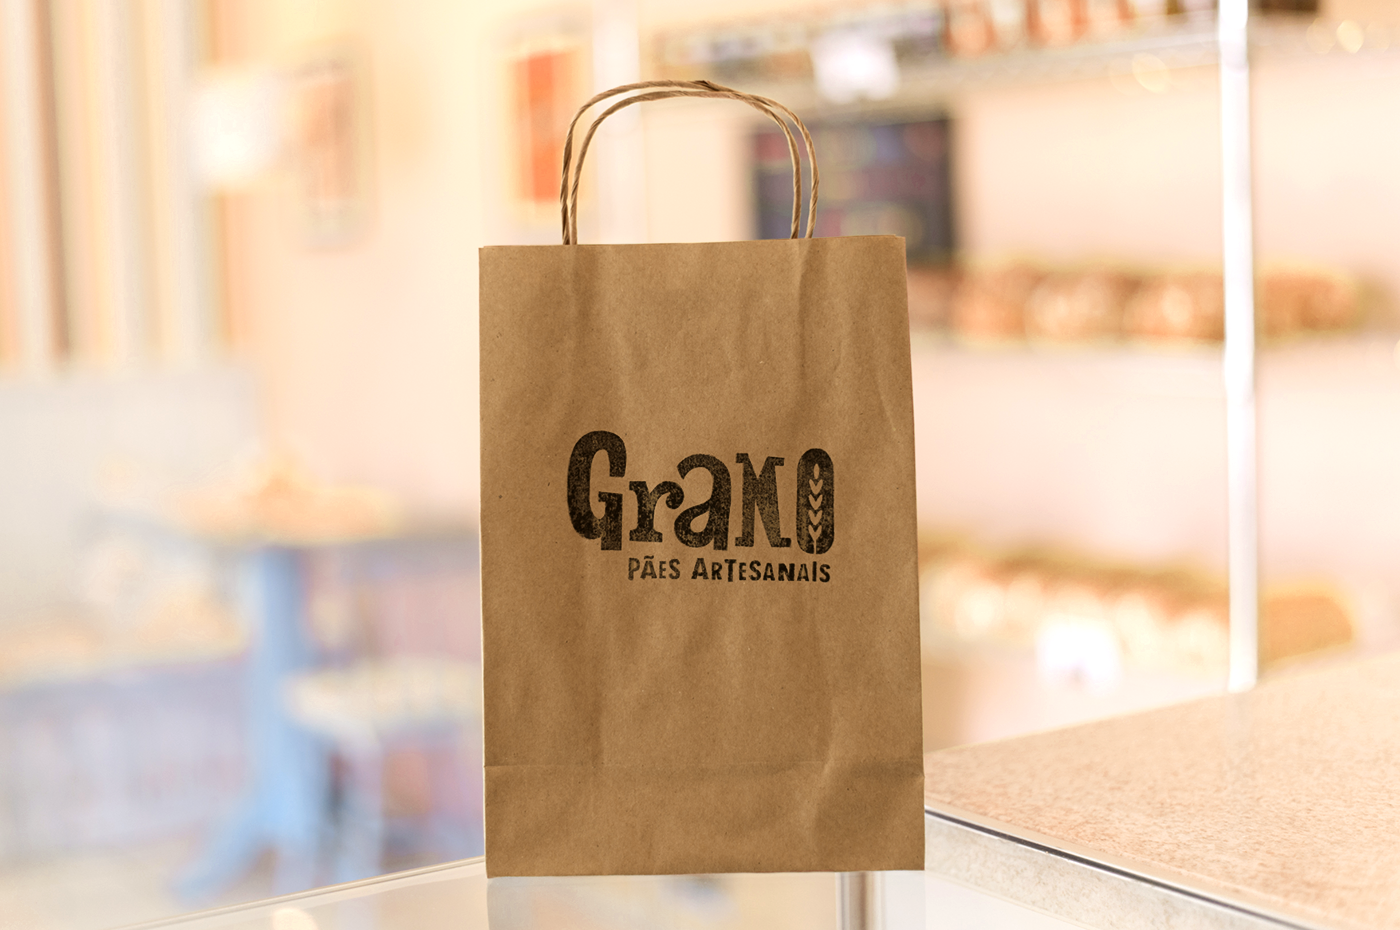 Grano bakery bread artesanal craft logo lettering artisan